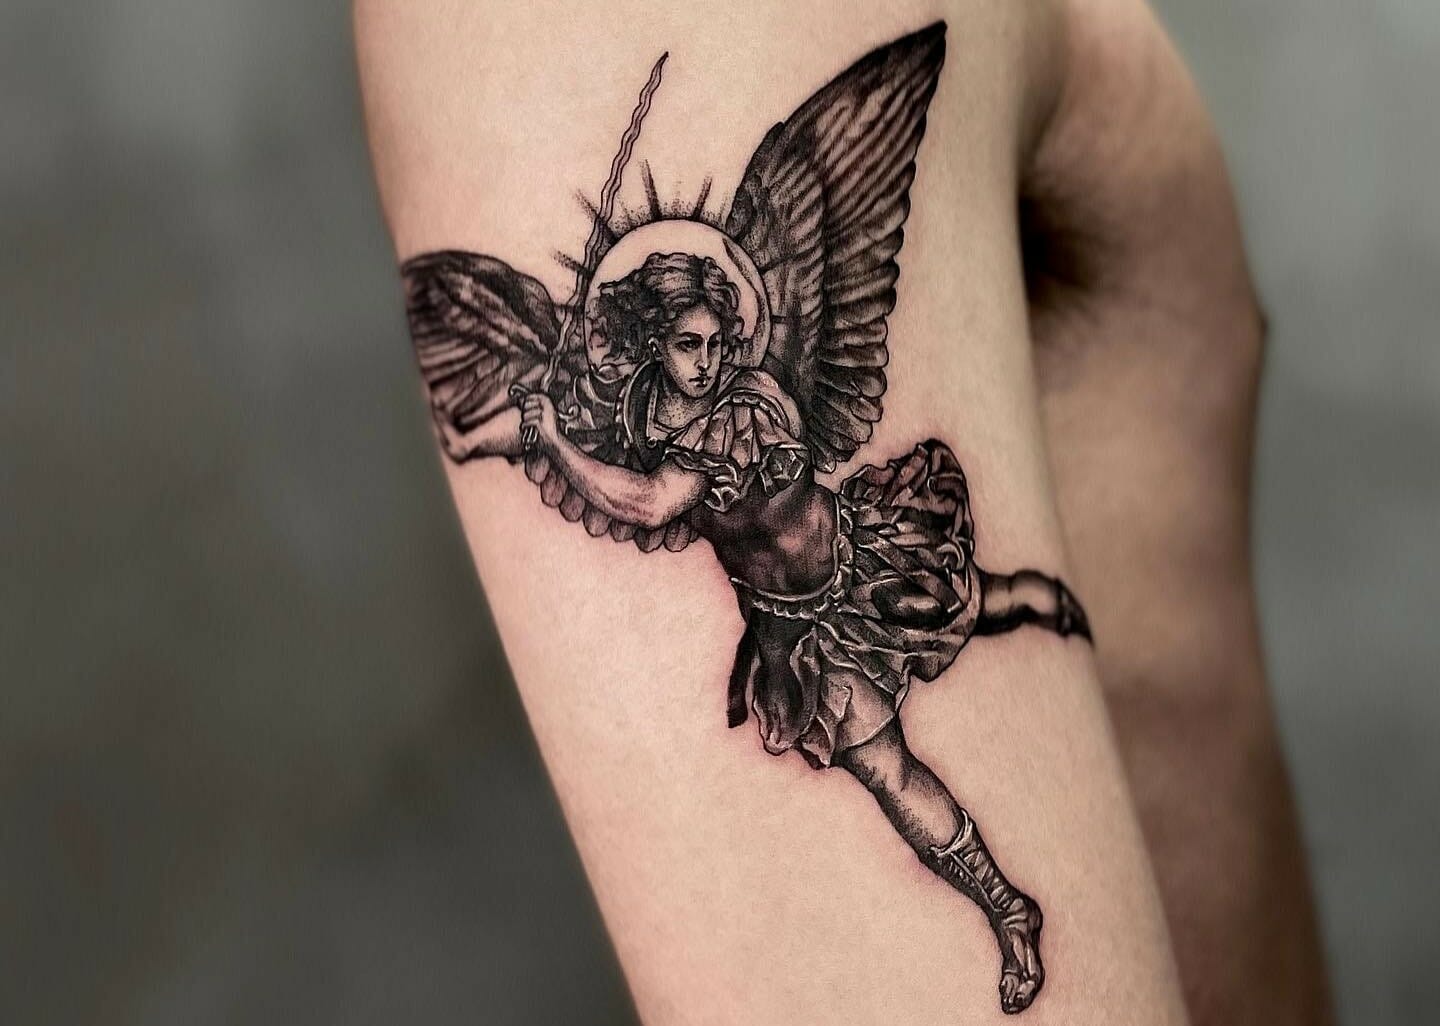 Michael Archangel tattoo  Miguel Angel Custom Tattoo Artist  Flickr